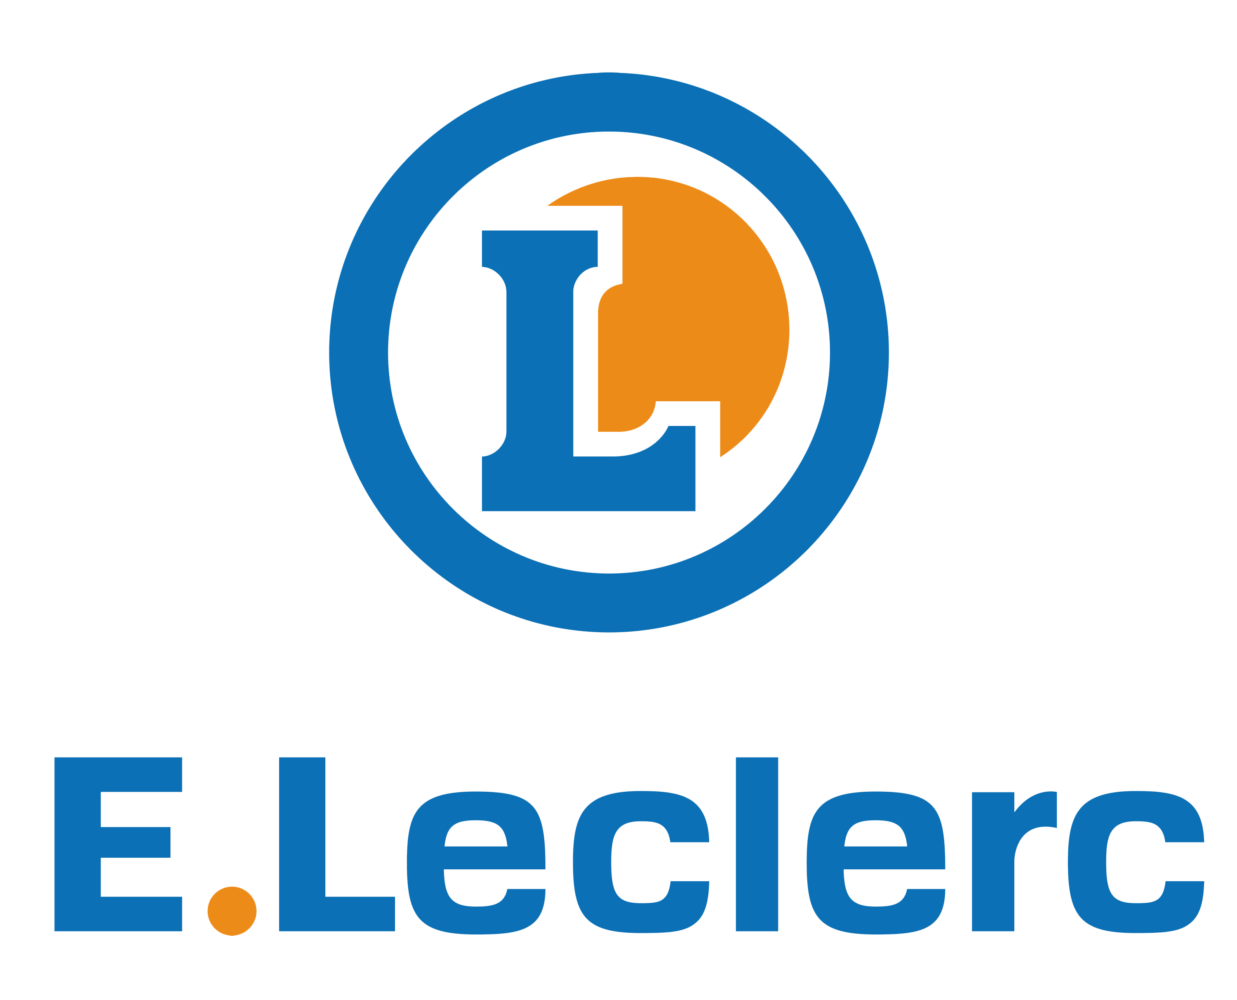 logo-leclerc